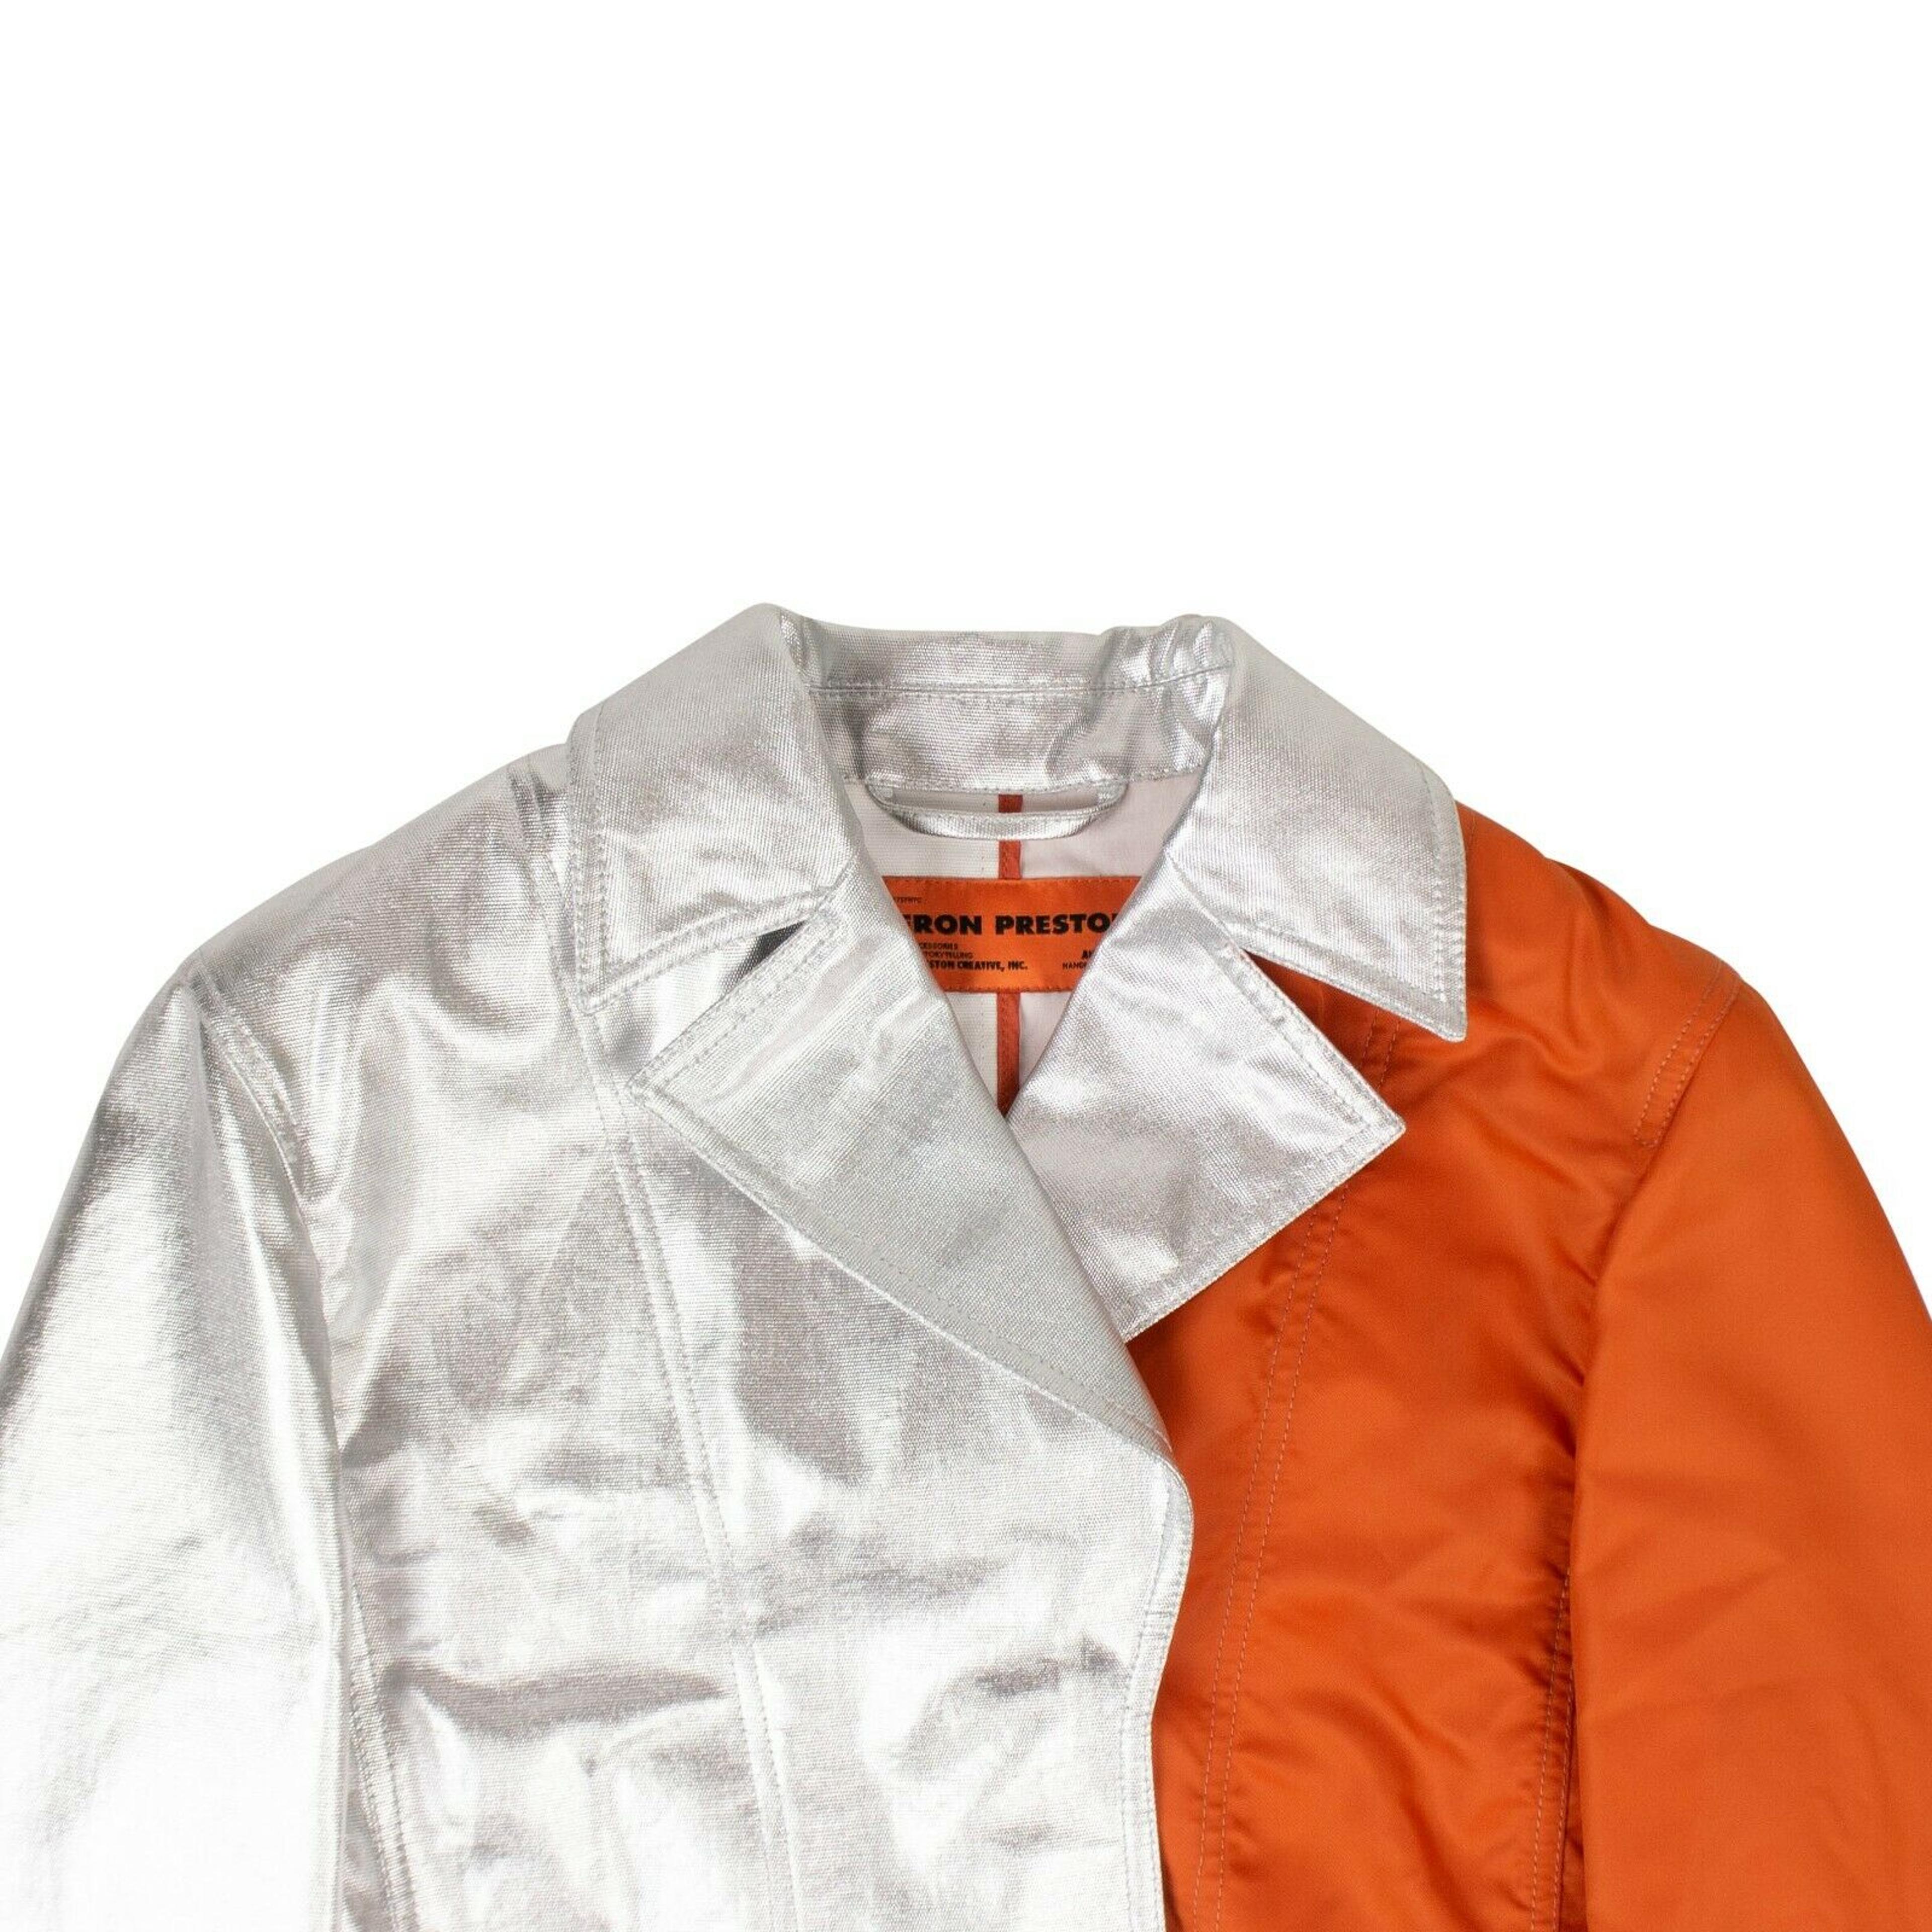 Alternate View 2 of Heron Preston Blazer Jacket - Silver/Orange